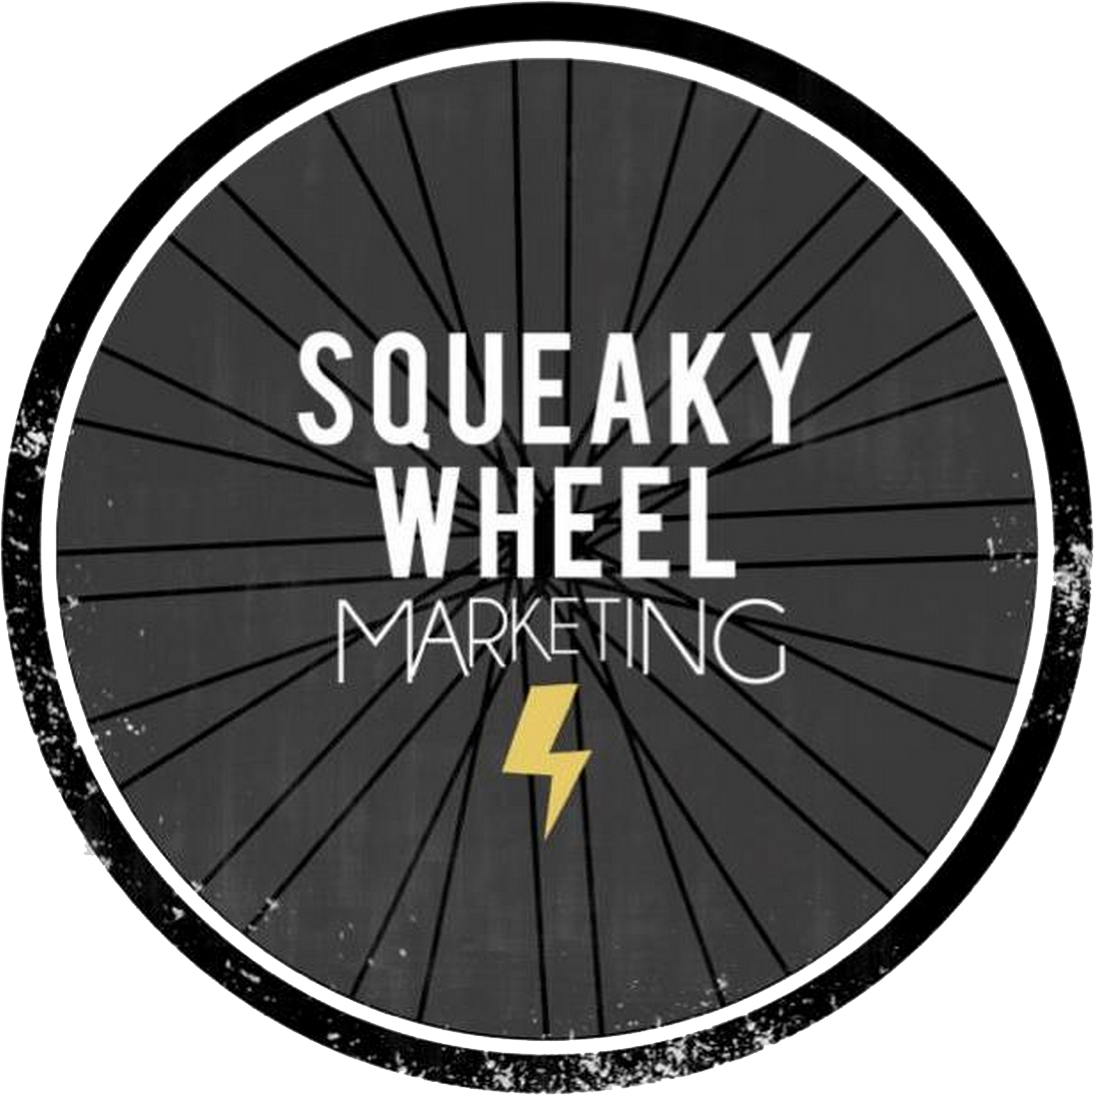 Squeaky Wheel Marketing